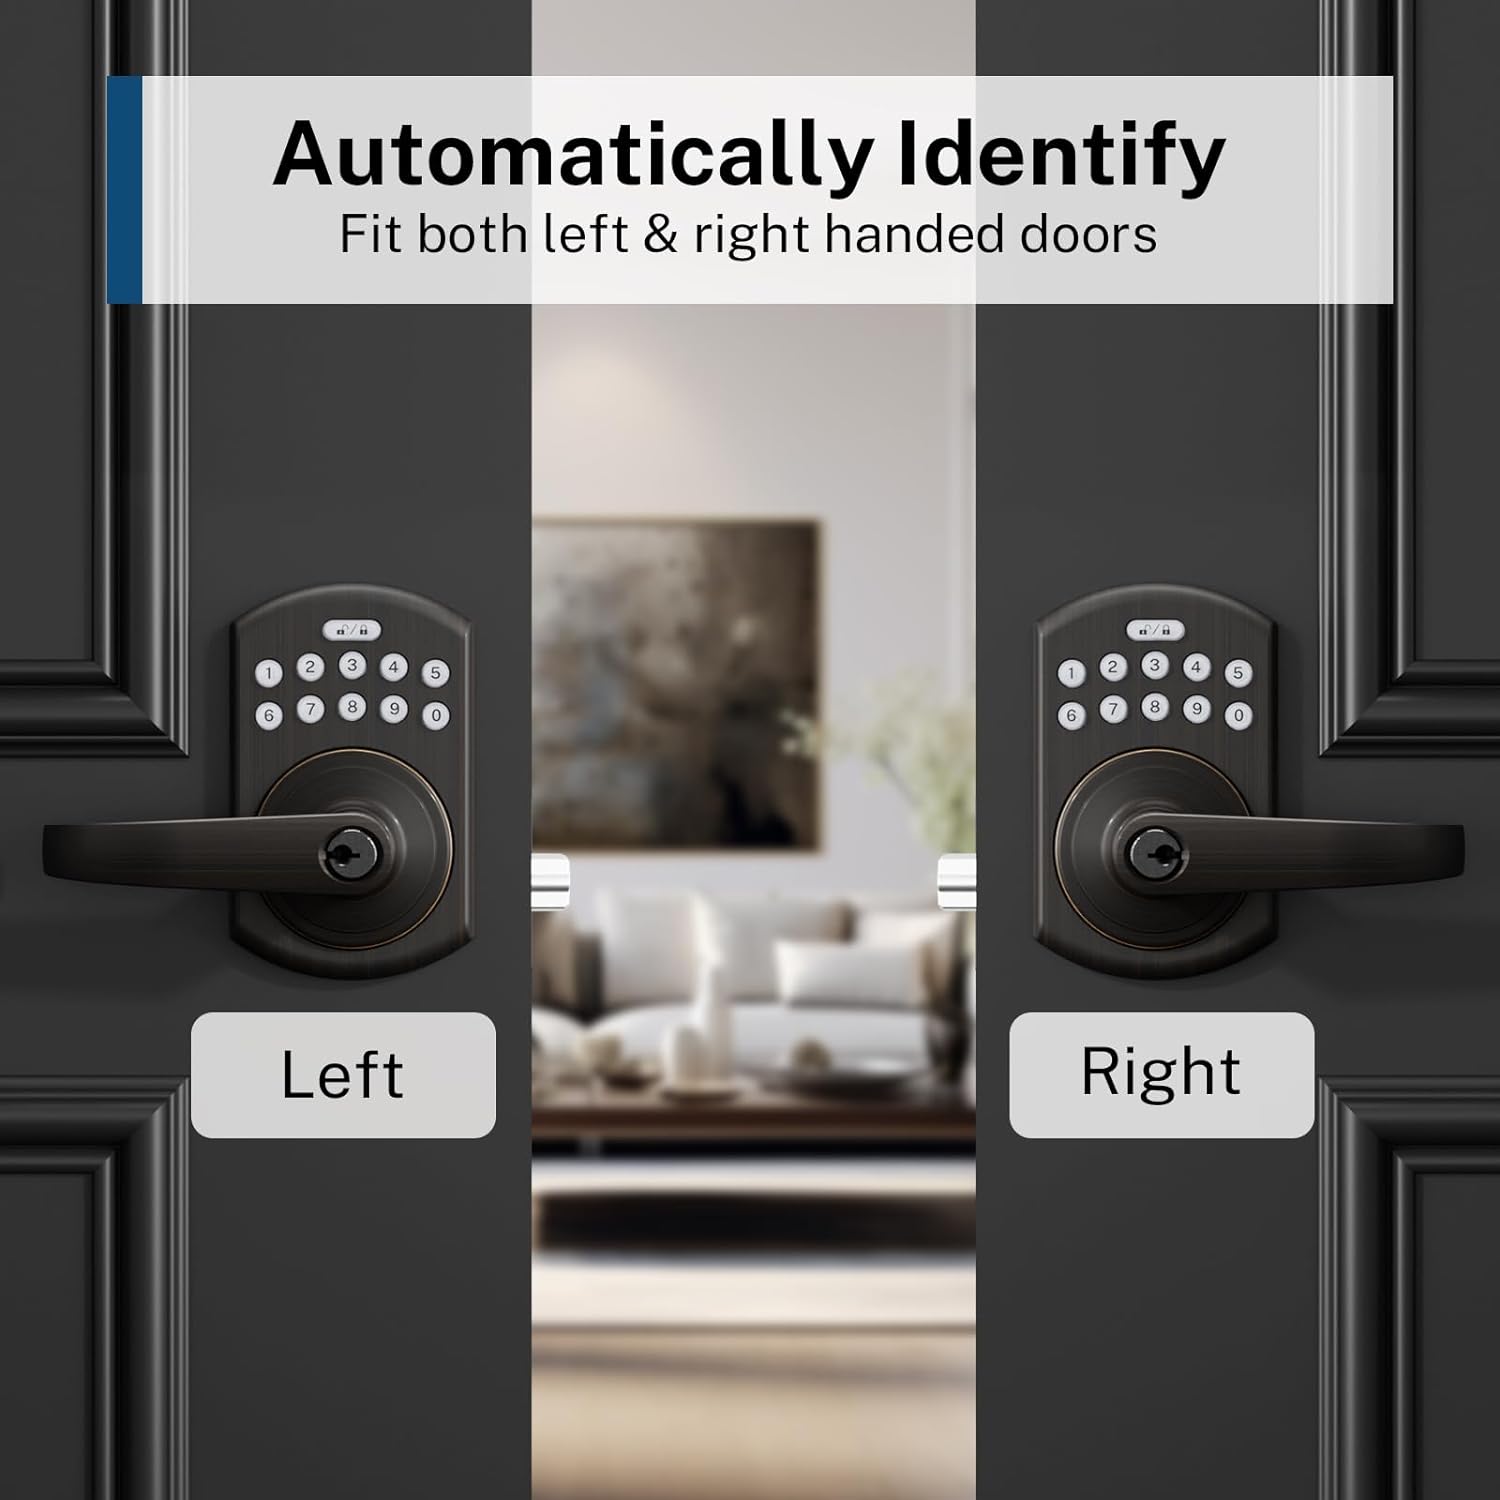 Signstek Keypad Entry Lever Door Lock with LED Backlit Keypad Password/Key Accessibles, Oil Rubbed Bronze